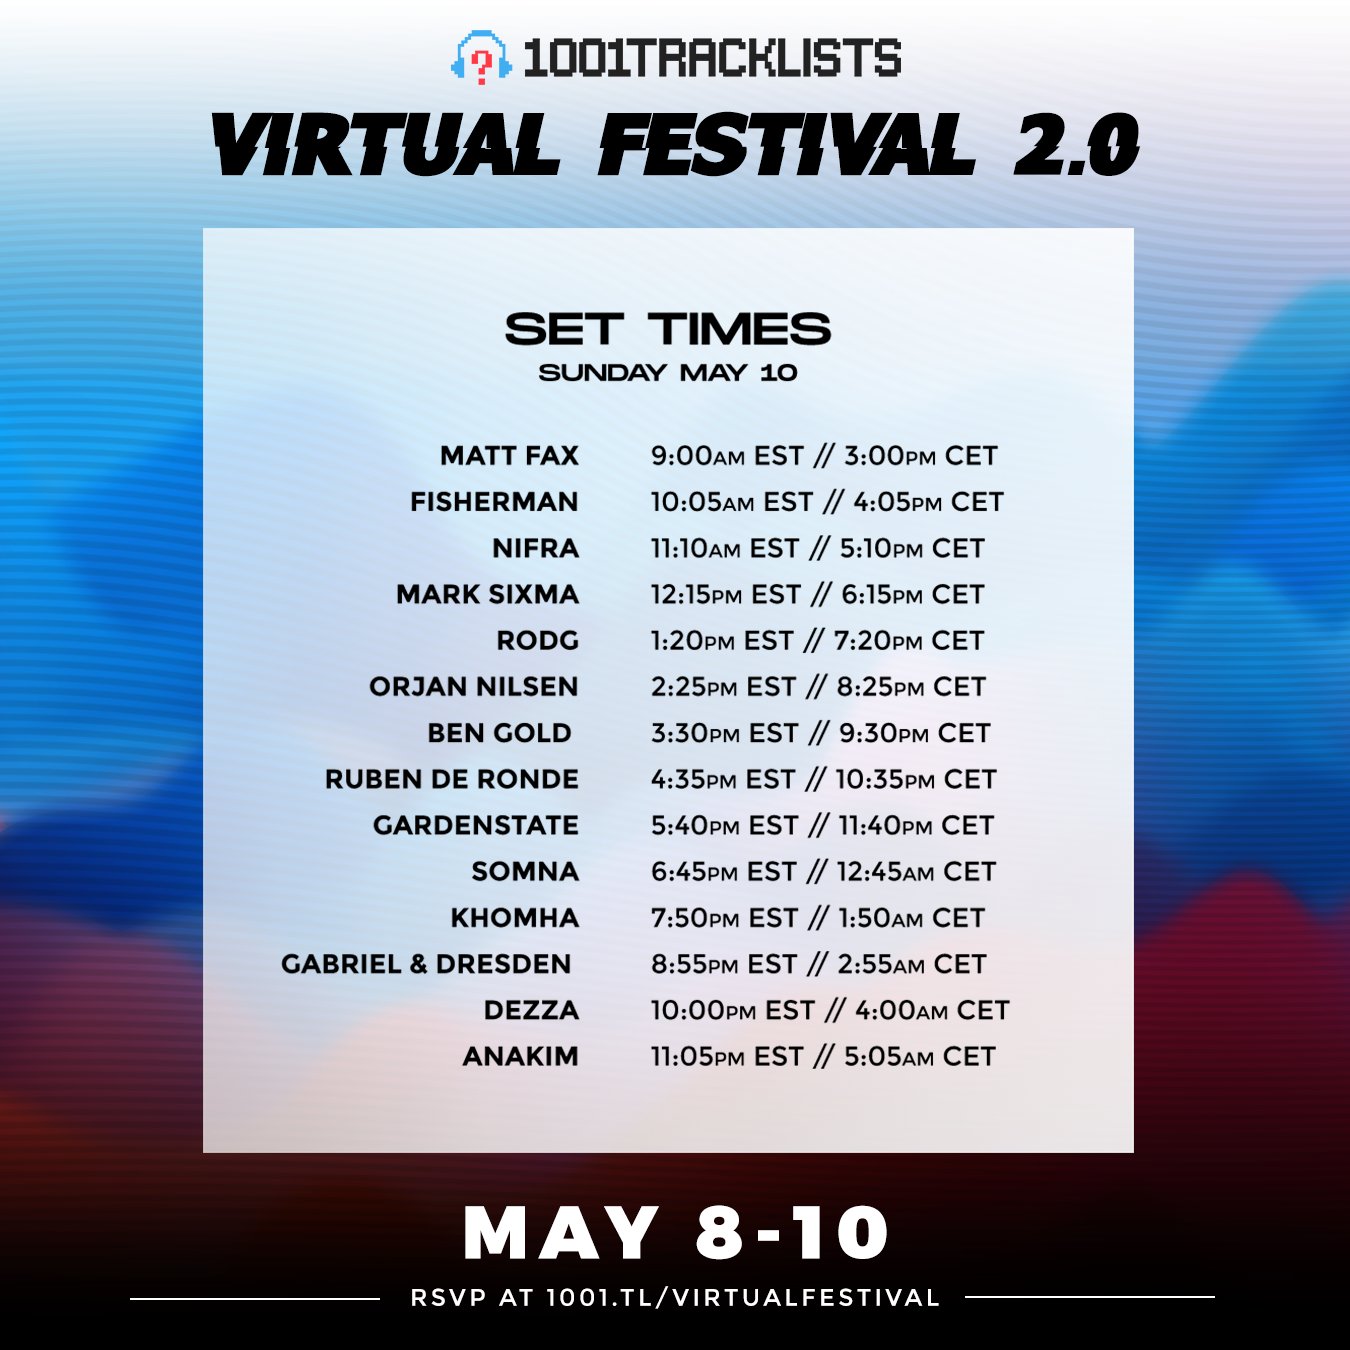 1001Tracklists Virtual Festival Schedule - Sunday